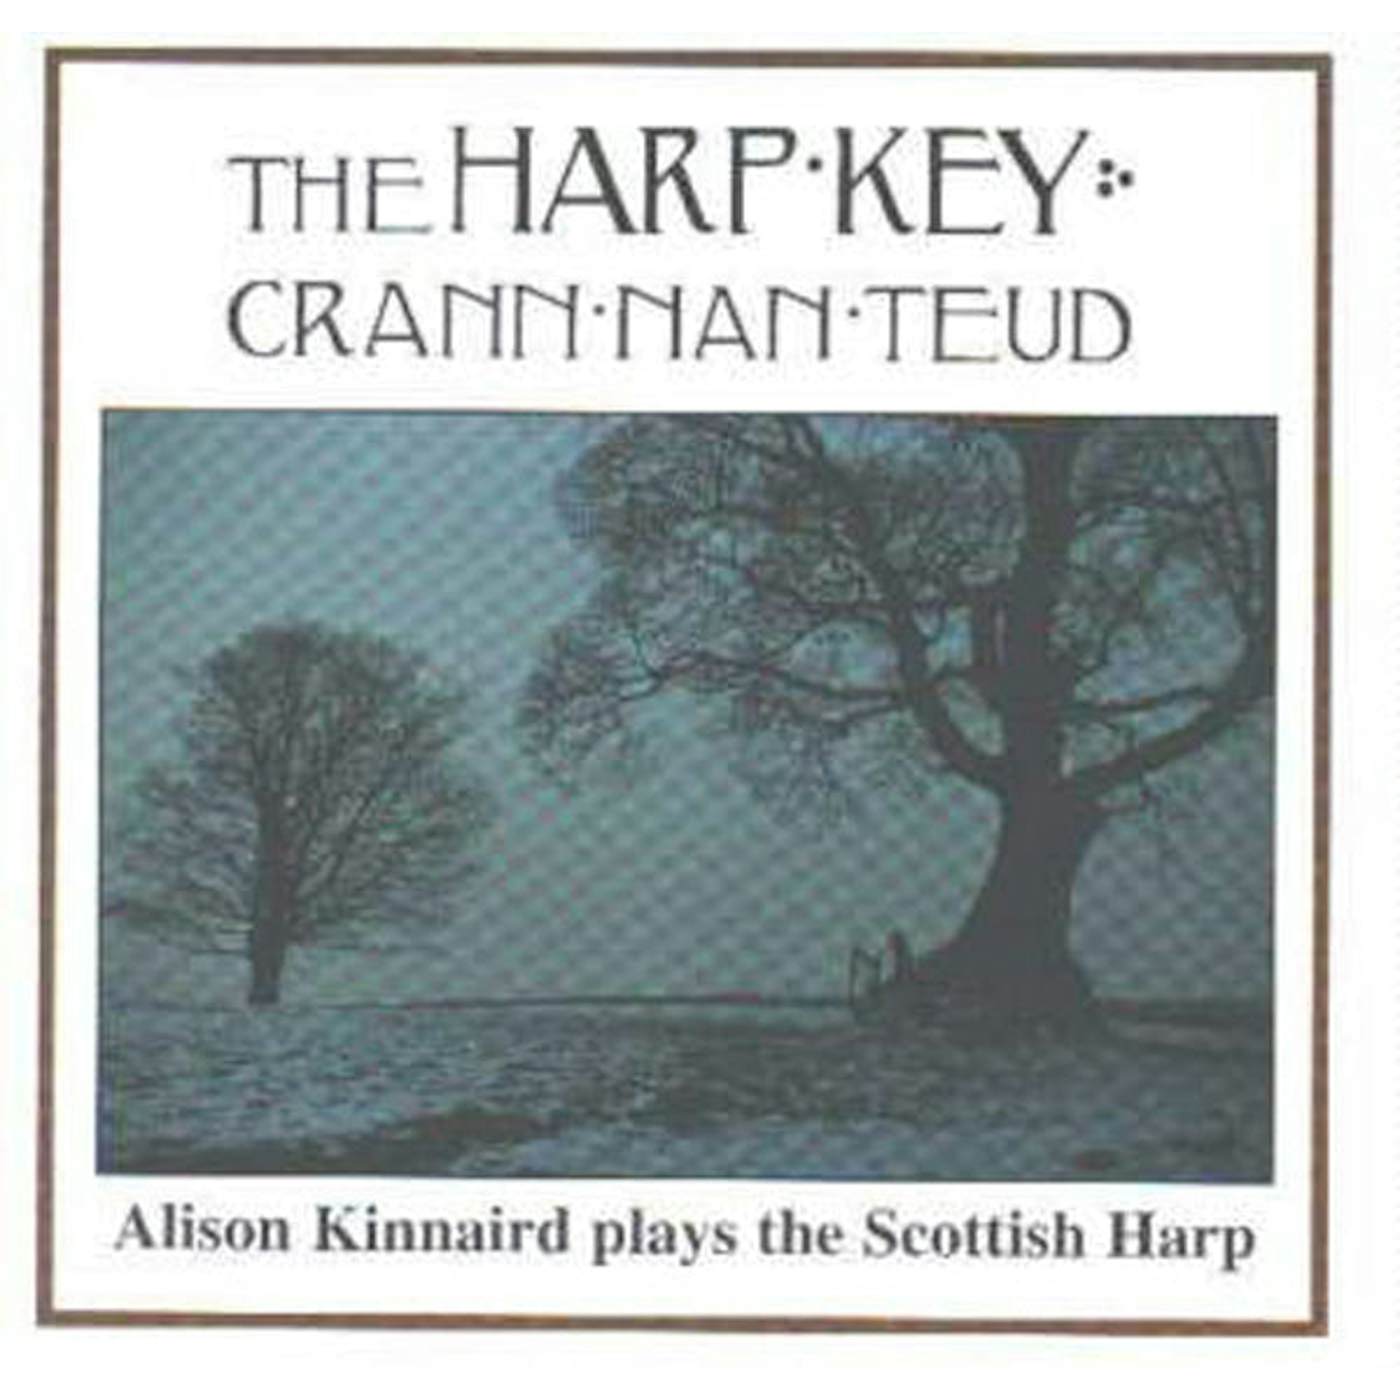 Alison Kinnaird LP - The Harp Key (Grann Nan Teud) (Vinyl)